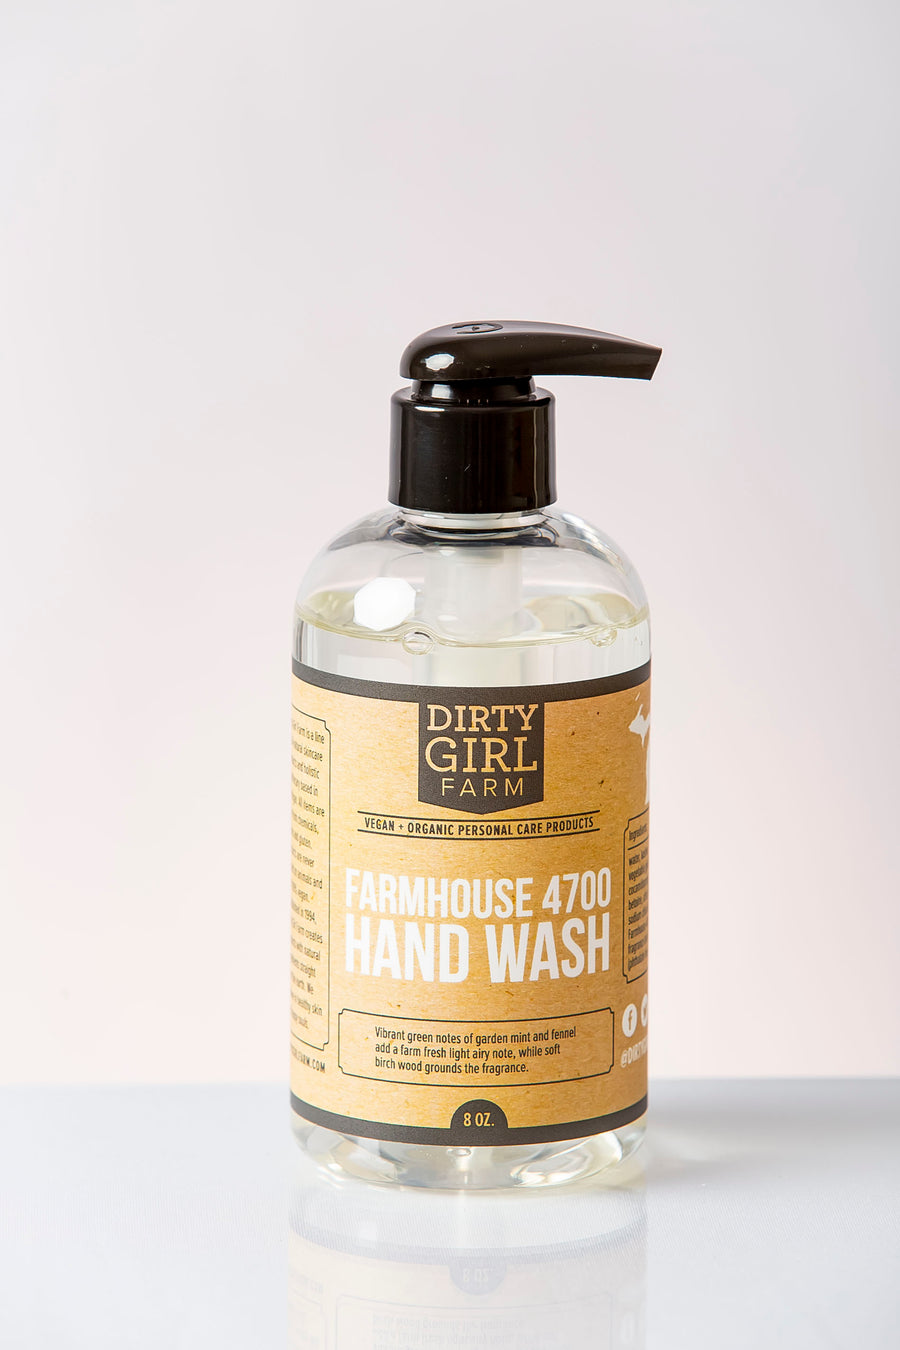 Dirty Girl Farm Farmhouse 4700 Hand Wash